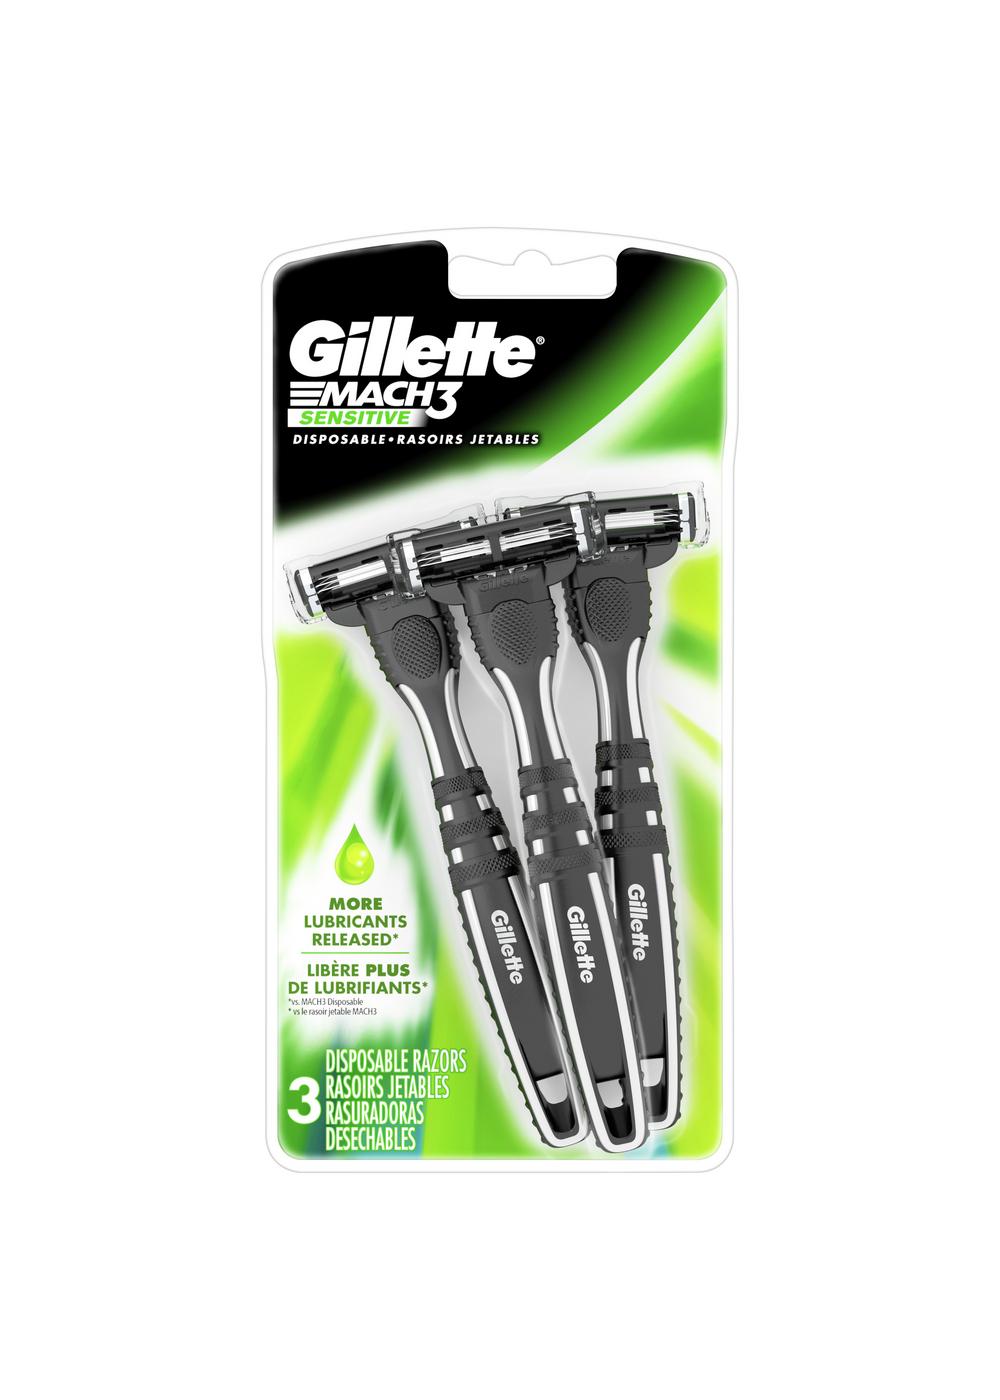 Gillette Mach3 Sensitive Disposable Razors; image 1 of 9